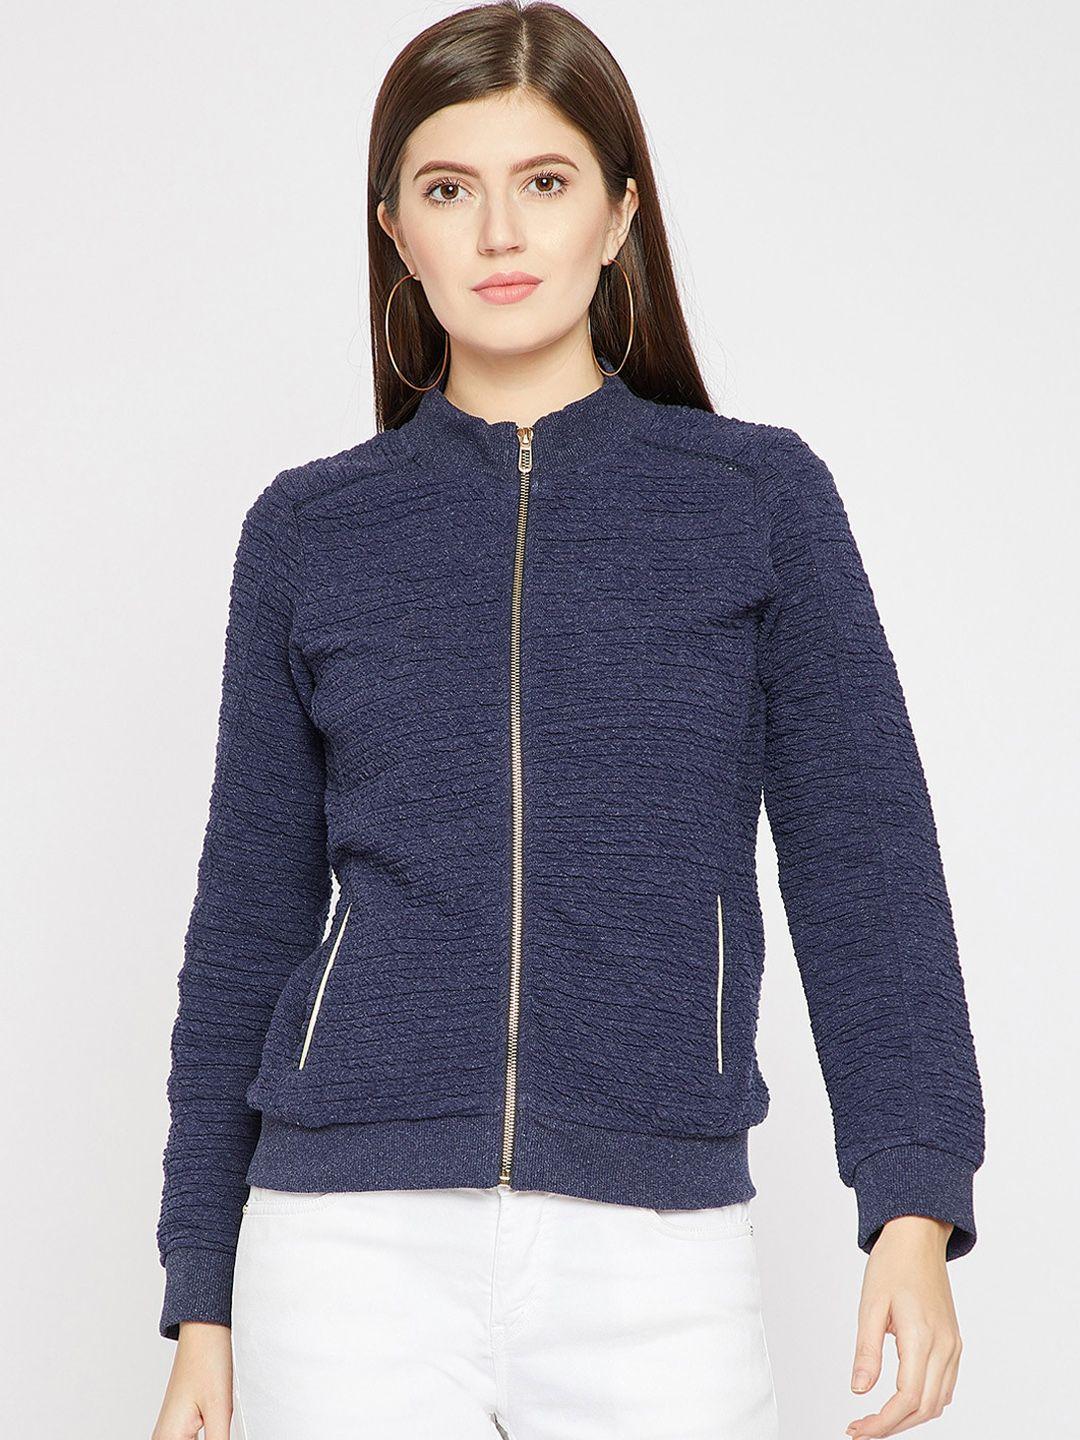 carlton-london-women-navy-blue-solid-sweatshirt